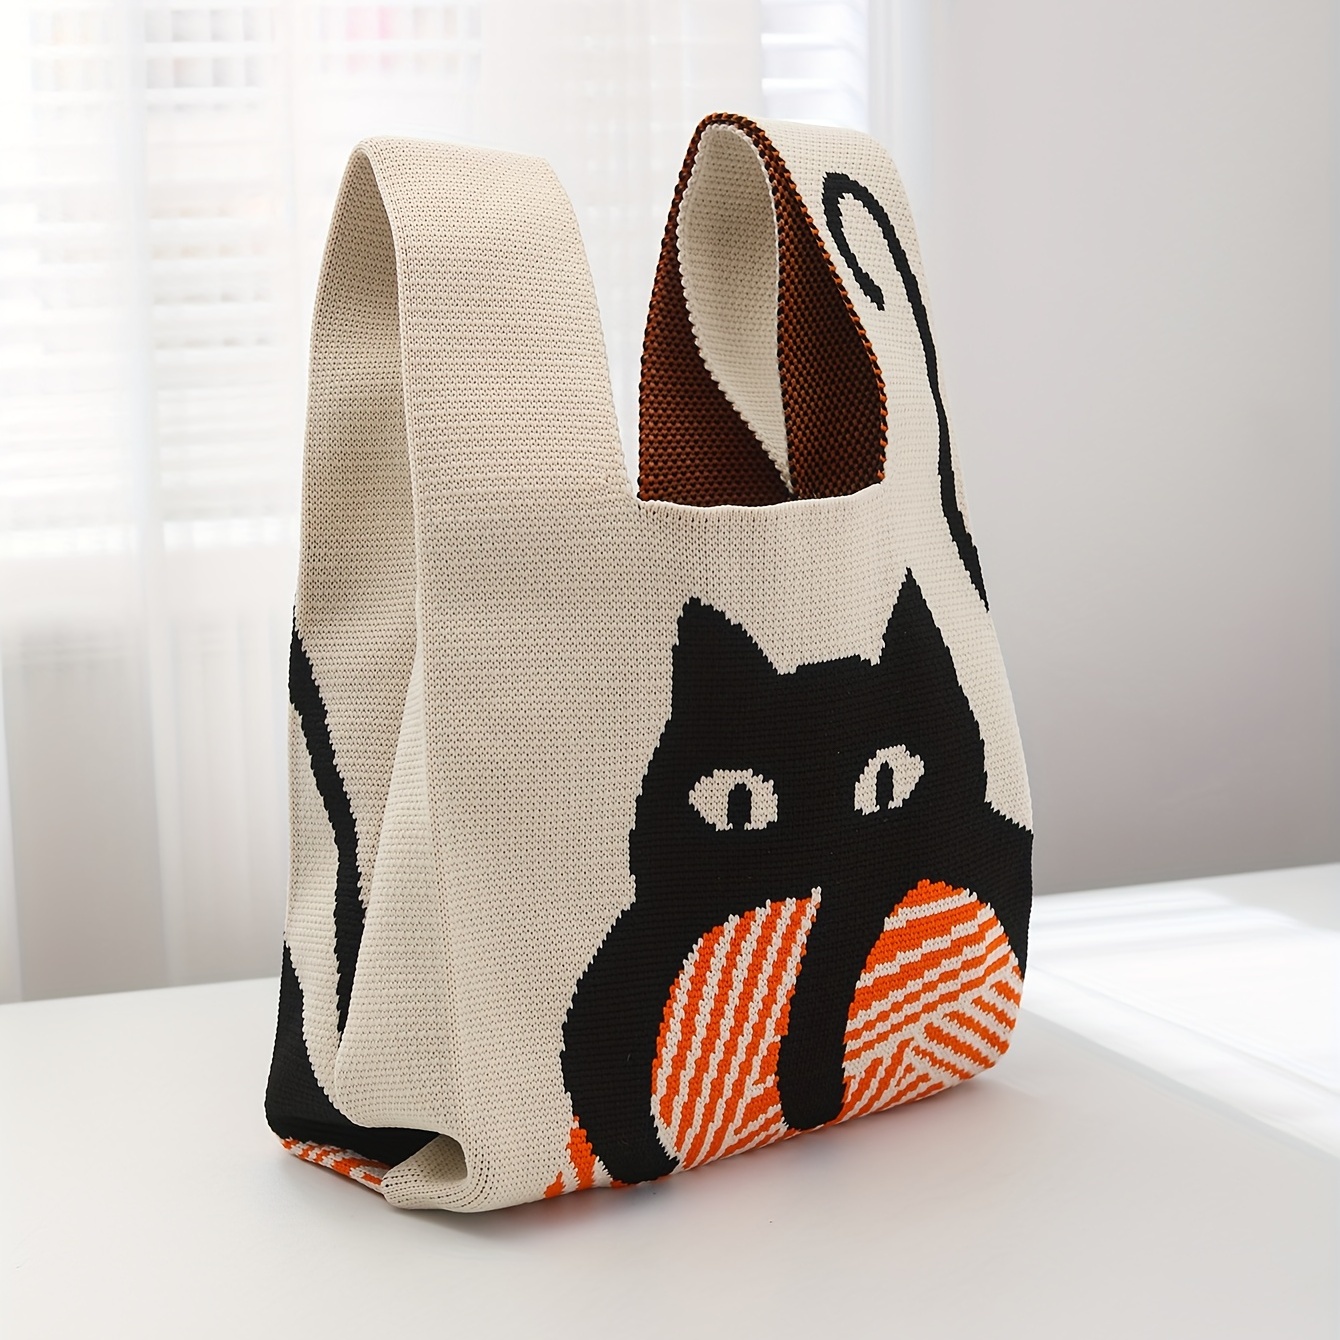 Cat Tote Bag Cat Shoulder Bag Crochet Cat Bag Vintage 